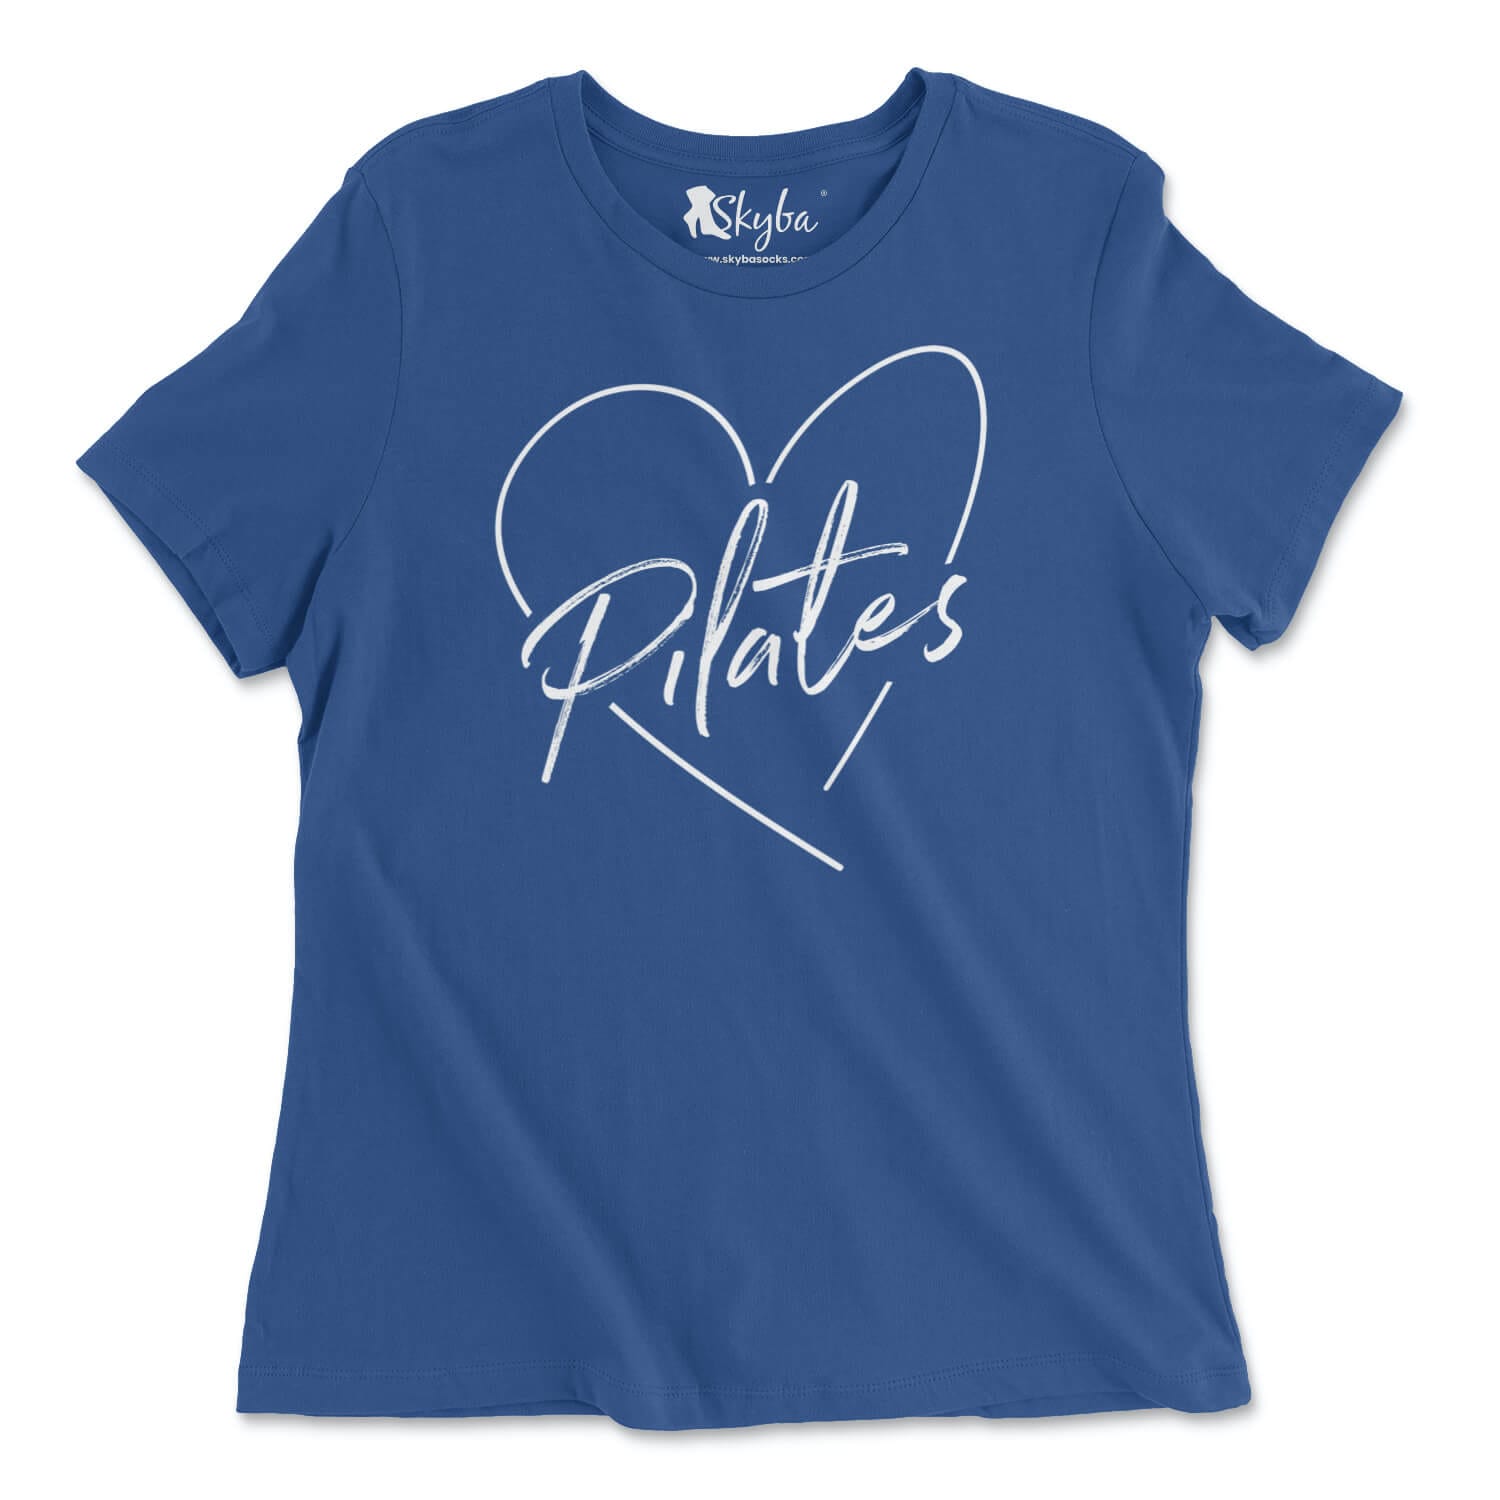 Pilates Lover - Classic Tee Skyba T-Shirt